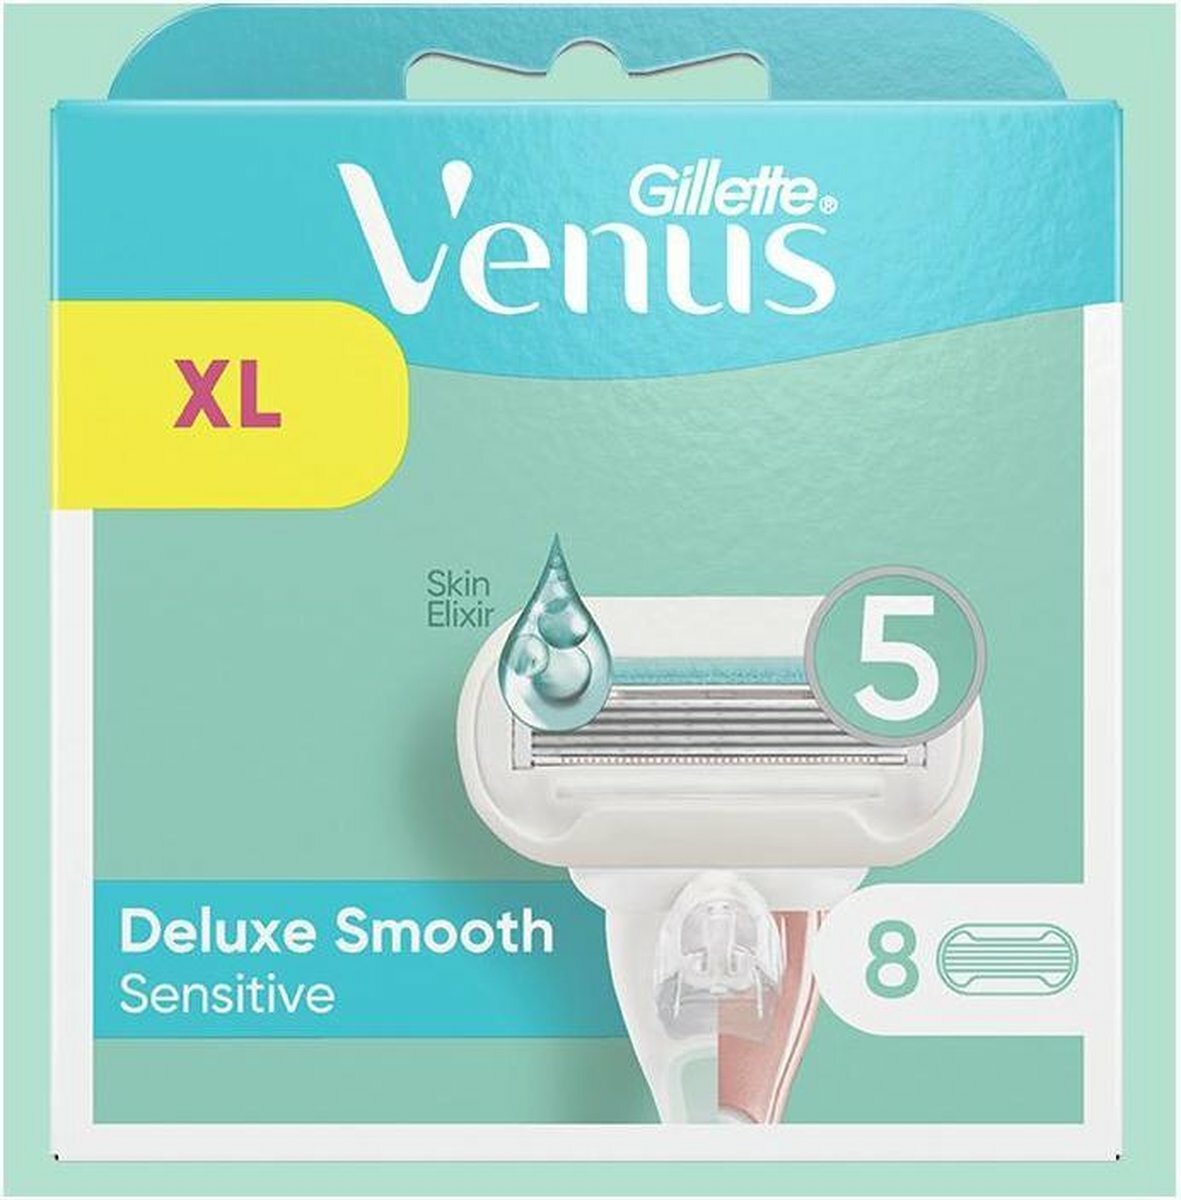 Сменные кассеты Gillette Venus Deluxe Smooth Sensitive Embrace, 8 шт сменные кассеты gillette venus deluxe smooth sensitive embrace 1 1 шт 2шт